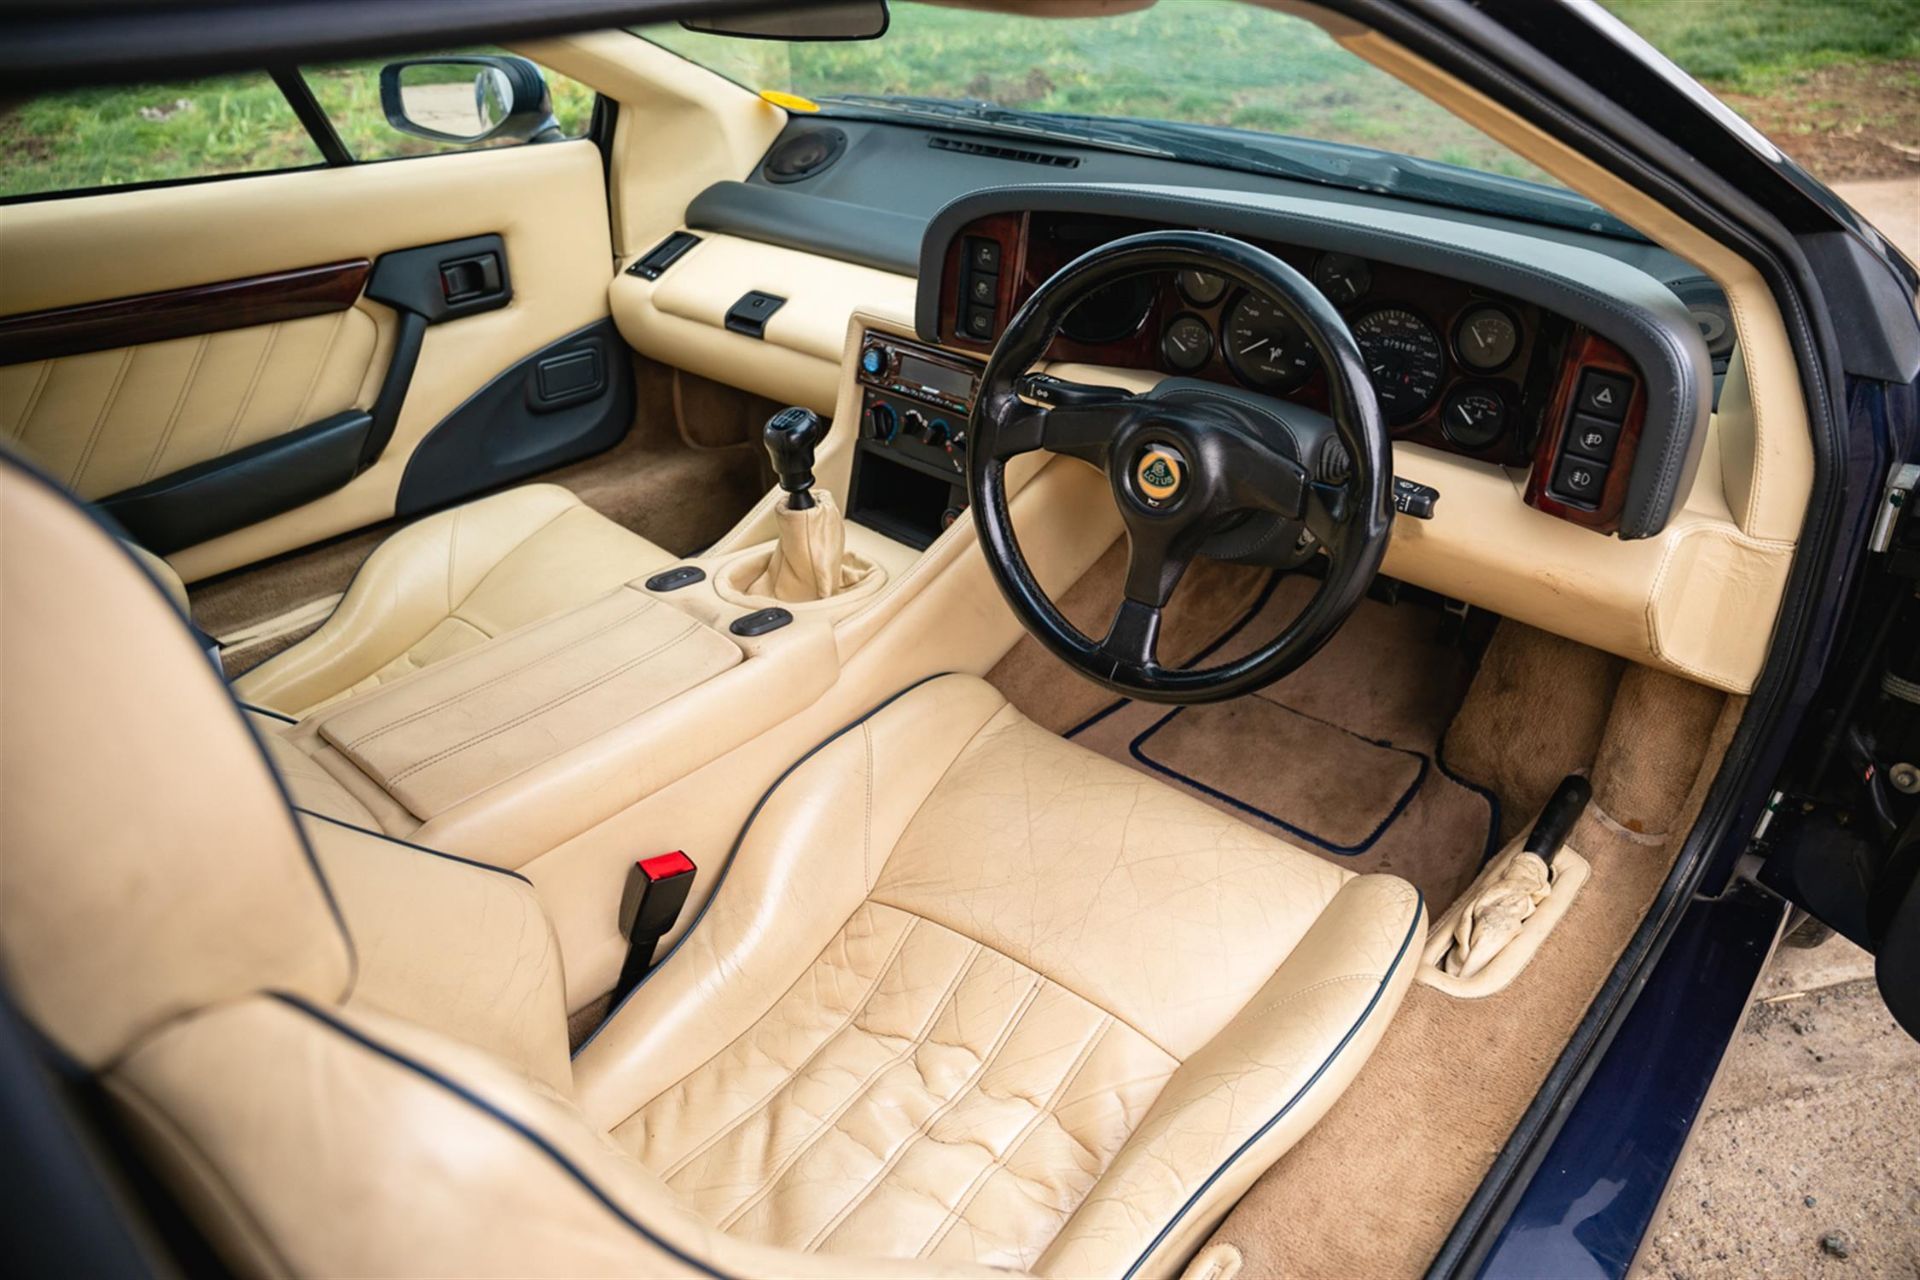 1996 Lotus Esprit V8 - Image 2 of 10